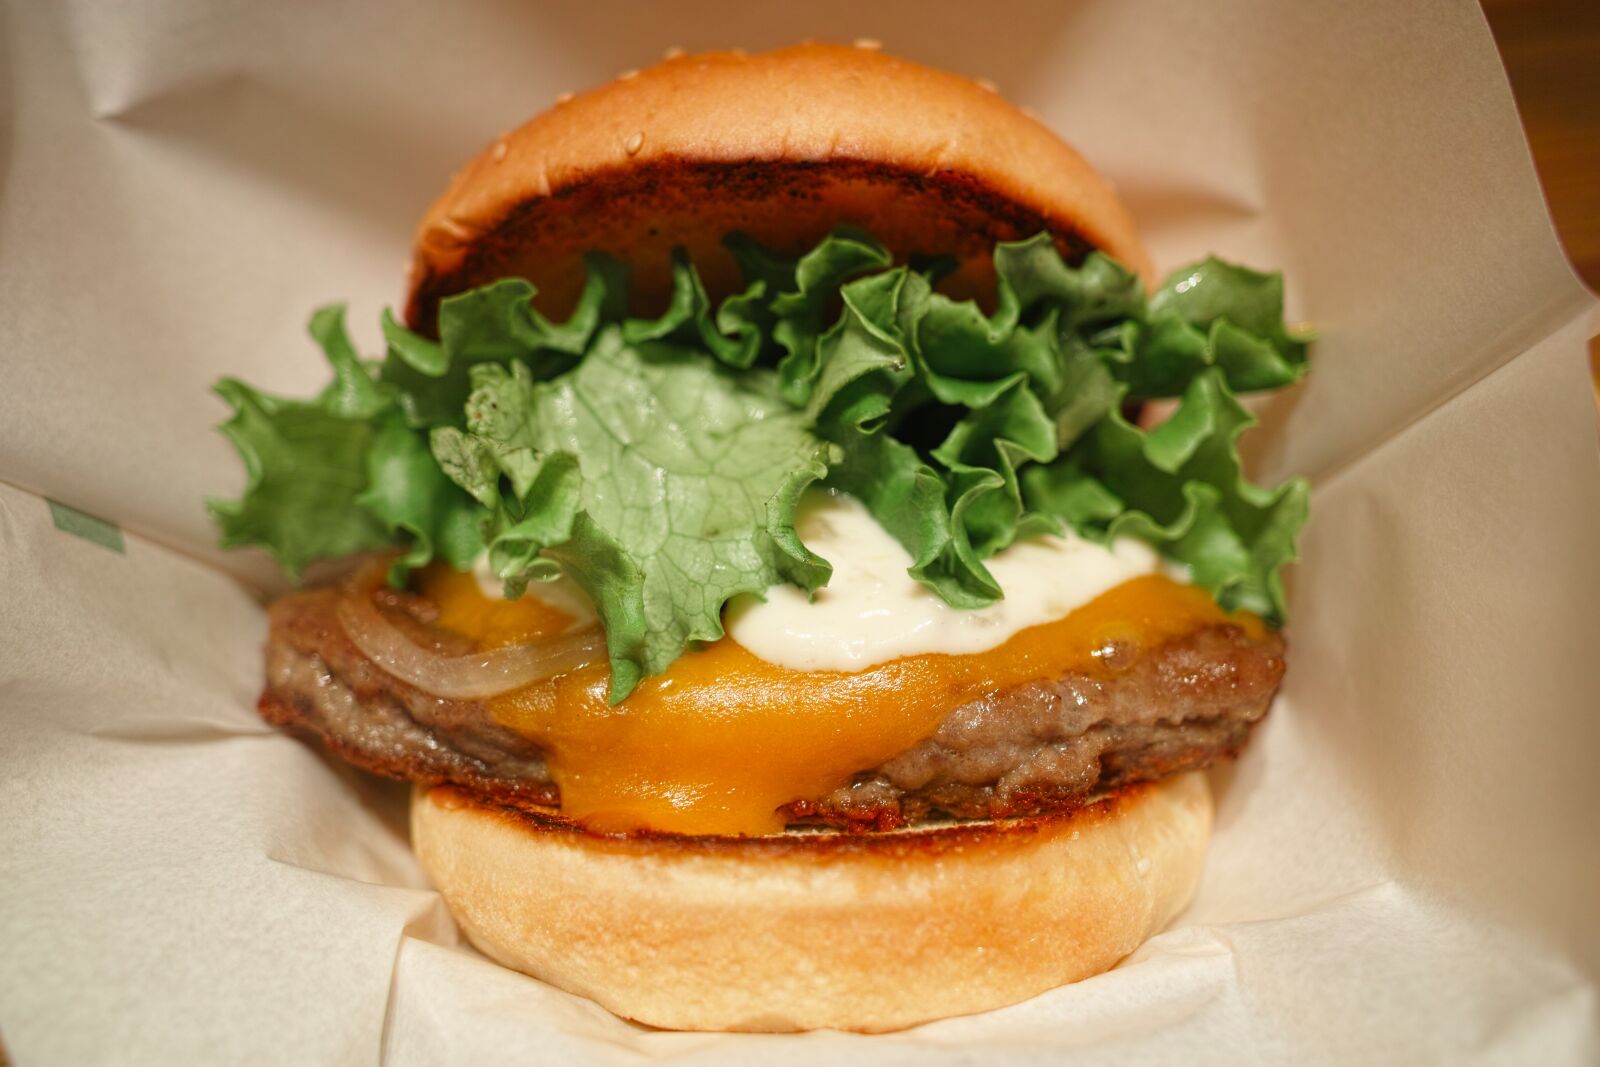 Sigma DP1 Merrill sample photo. Food, restaurant, burger photography